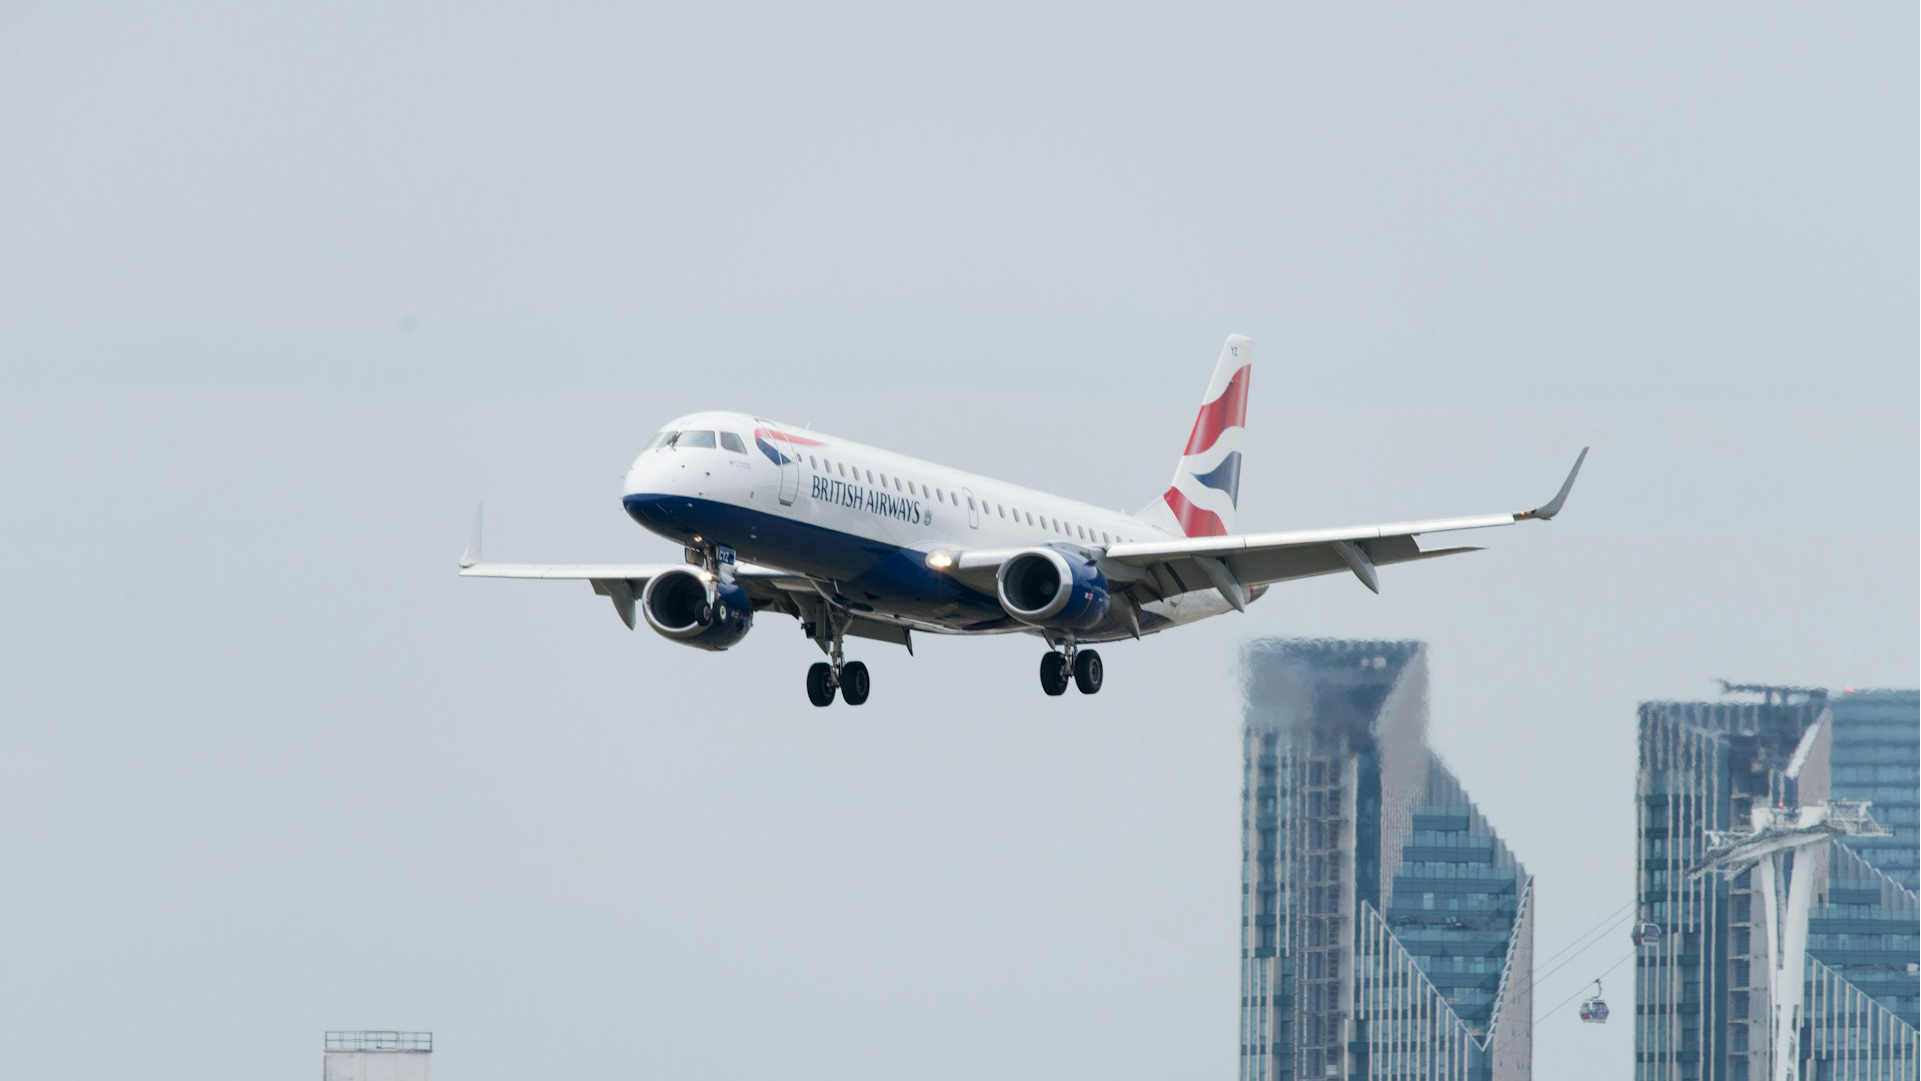 British Airways plane landing in London, related to new UK ETA requirements.